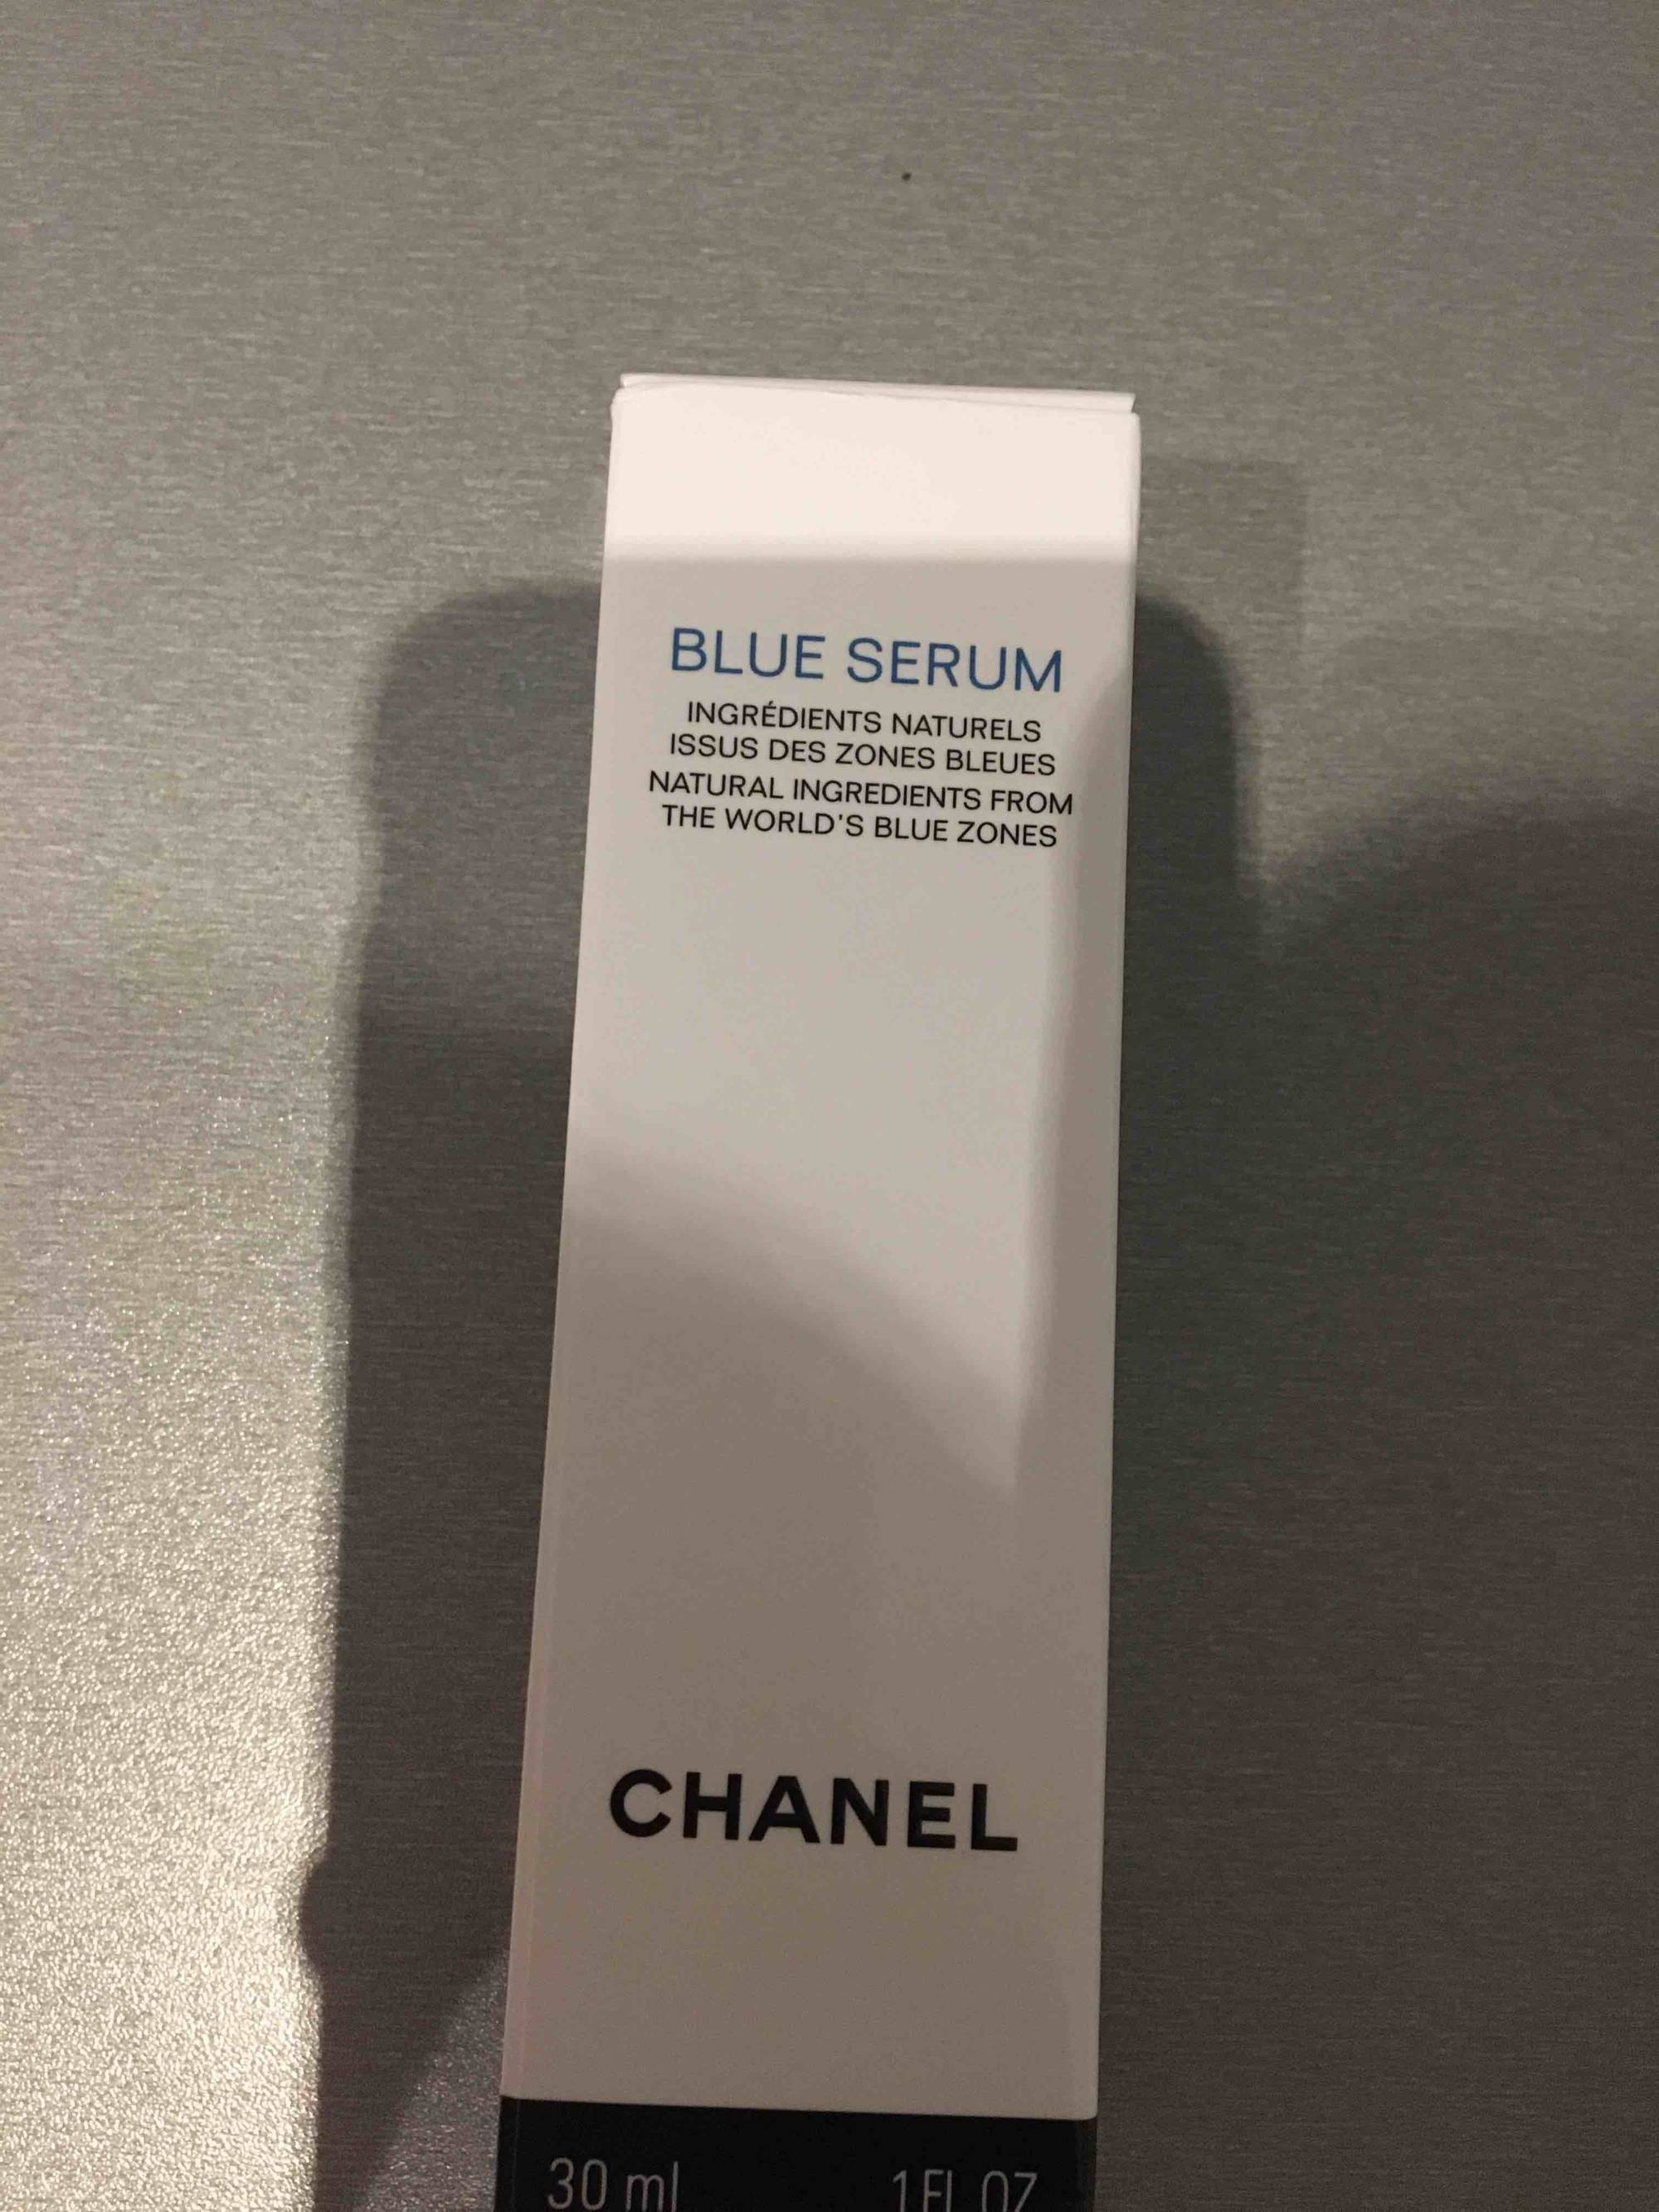 CHANEL - Blue serum